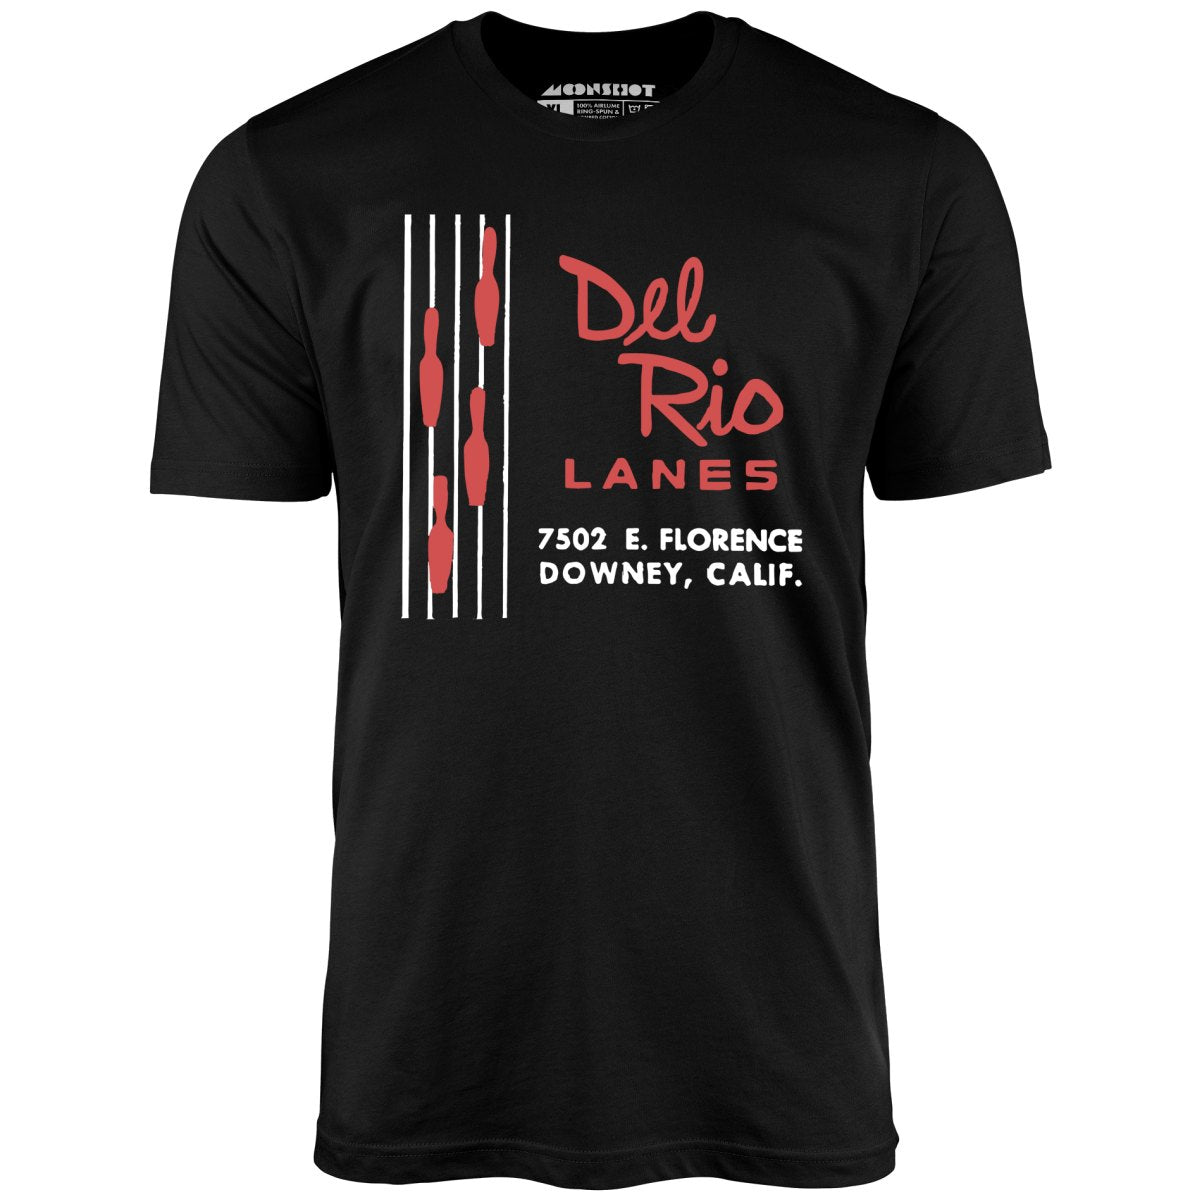 Del Rio Lanes - Downey, CA - Vintage Bowling Alley - Unisex T-Shirt